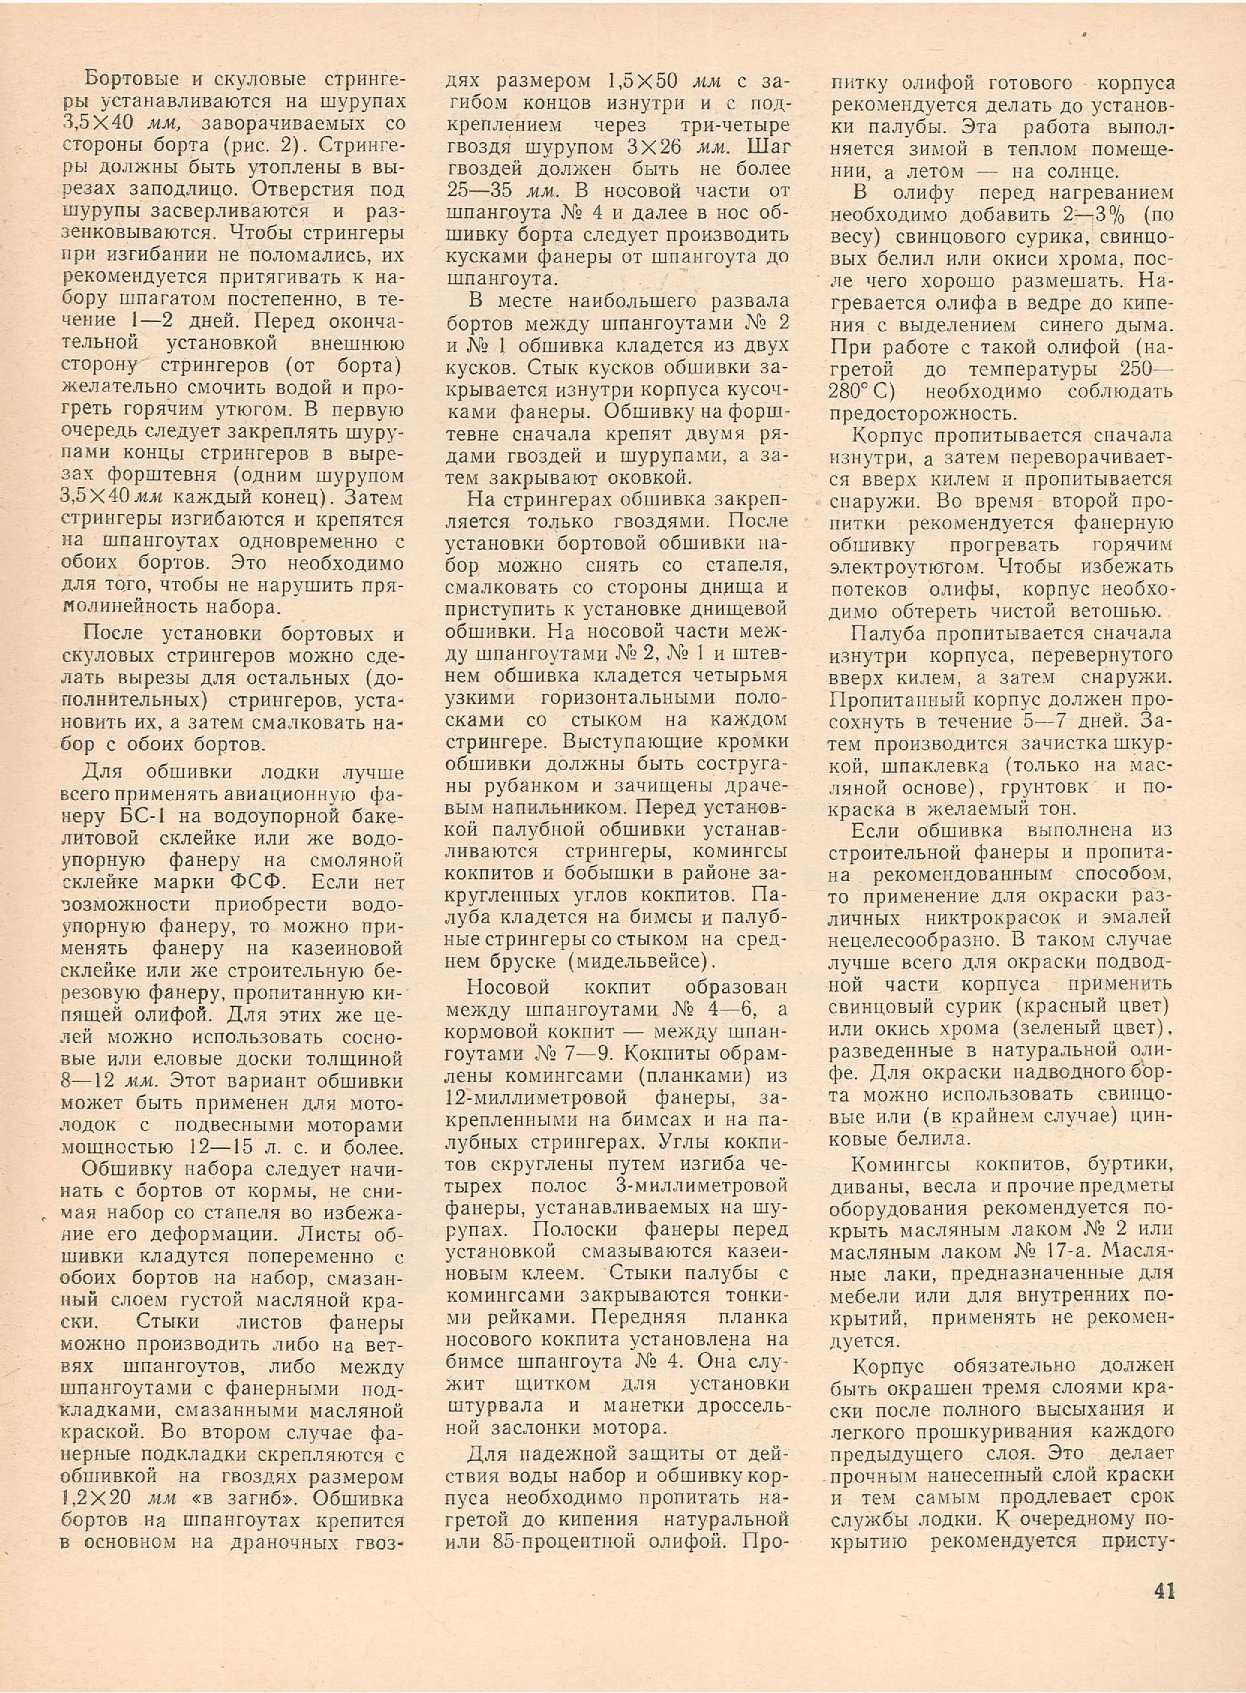 ЮМК 10, 1964, 41 c.